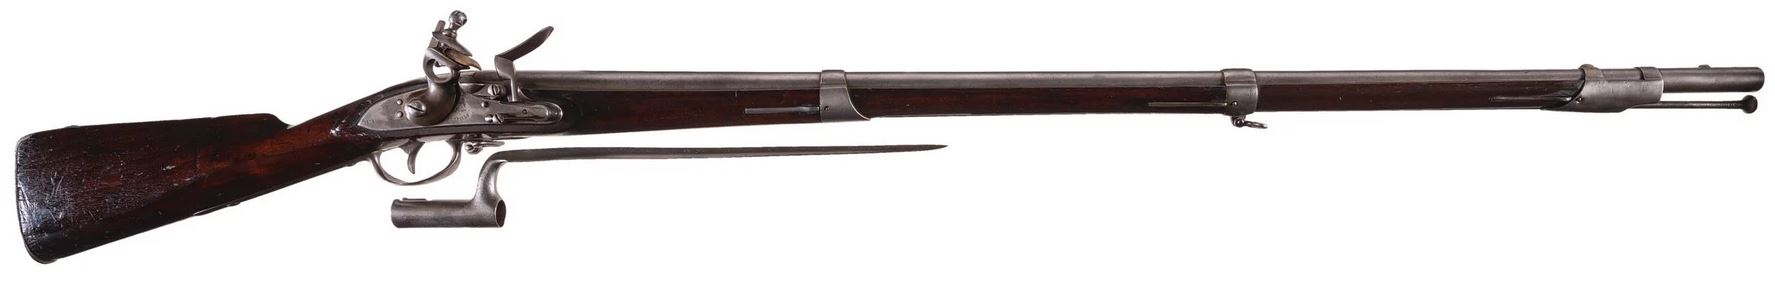 US Springfield Armory 1812 Flintlock Musket Maine